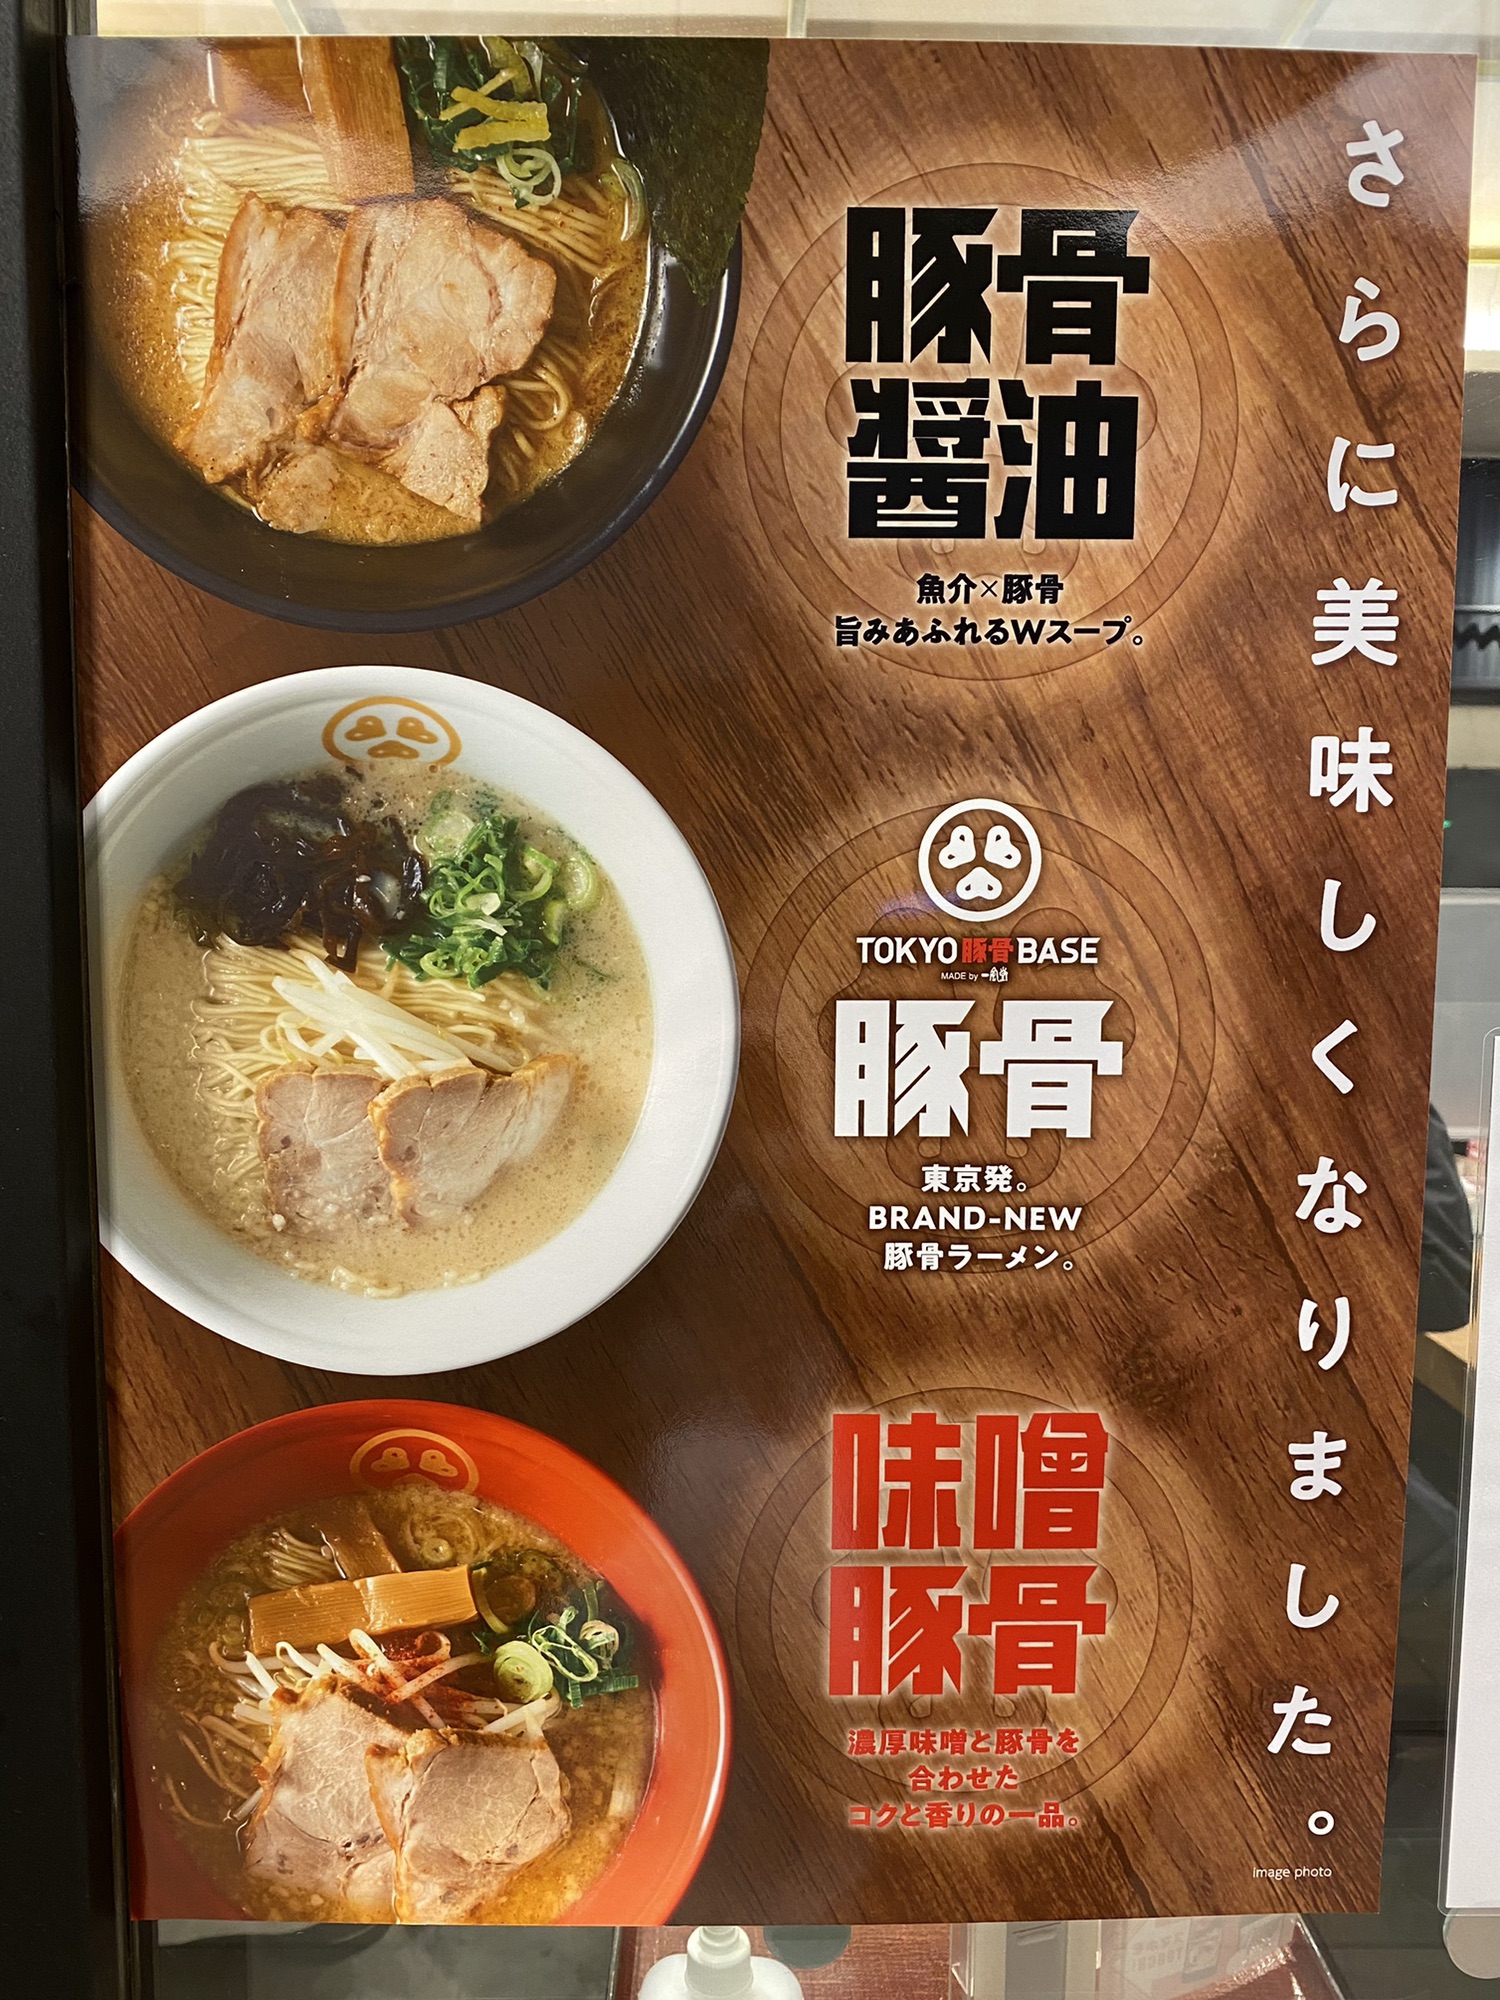 TOKYO豚骨BASE MADE by 一風堂 ペリエ千葉（千葉） | 千葉拉麺通信